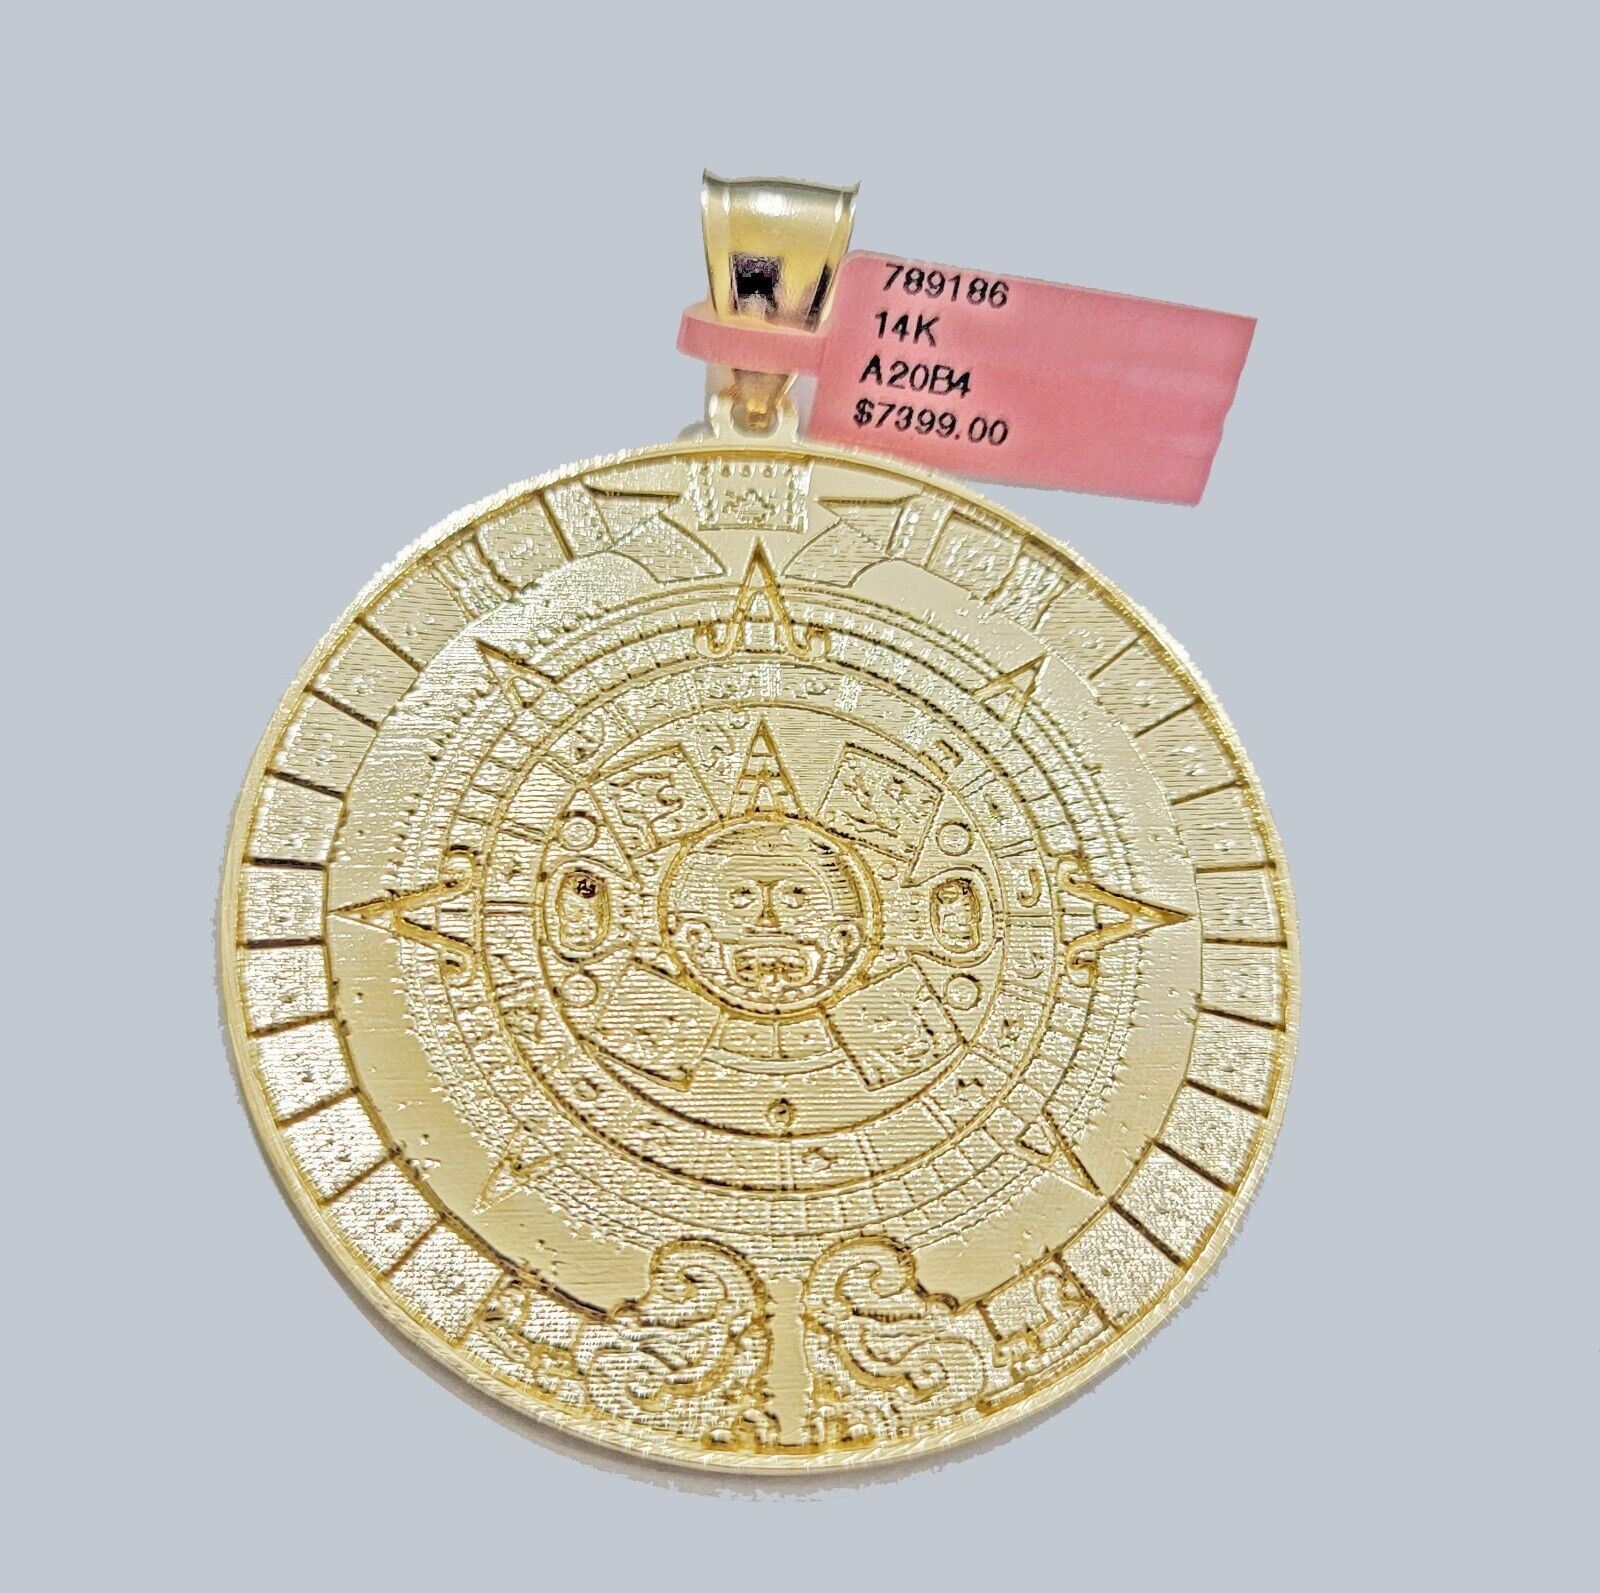 SOLID Real 14kt Yellow Gold Pendant Aztec Mayan Calendar 3.2